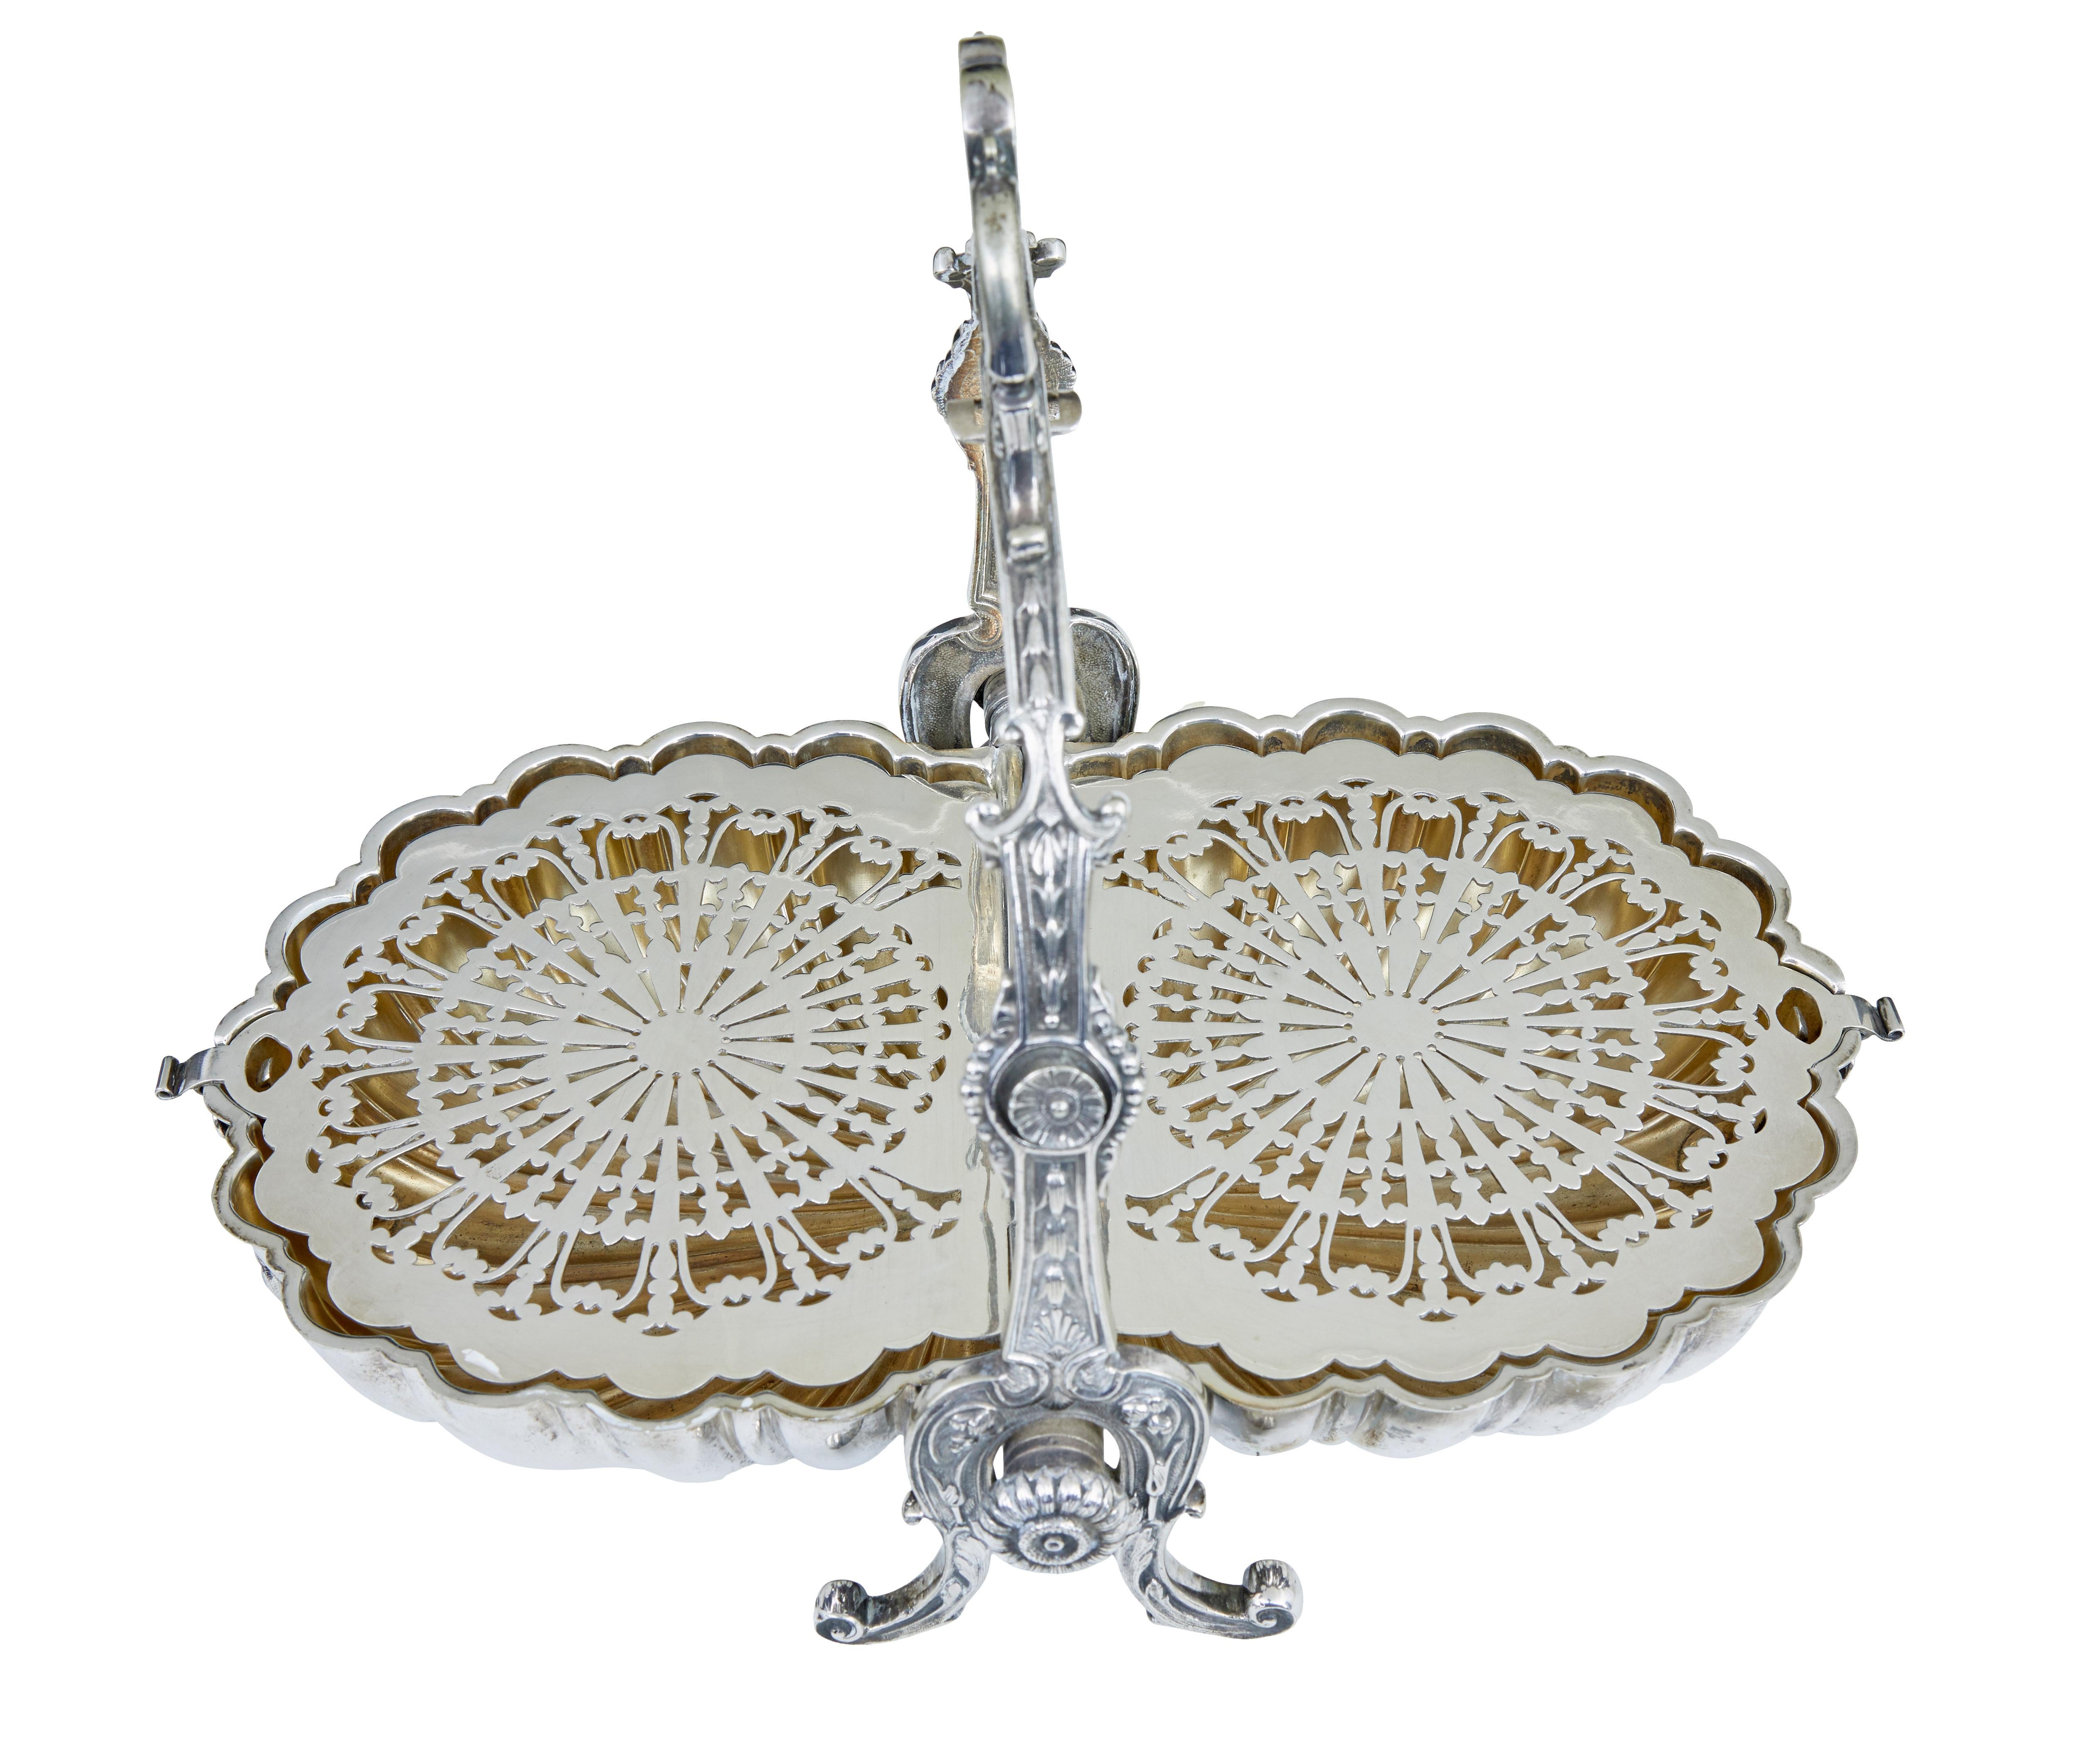 19th Century silver plated decorative bun warmer For Sale 1